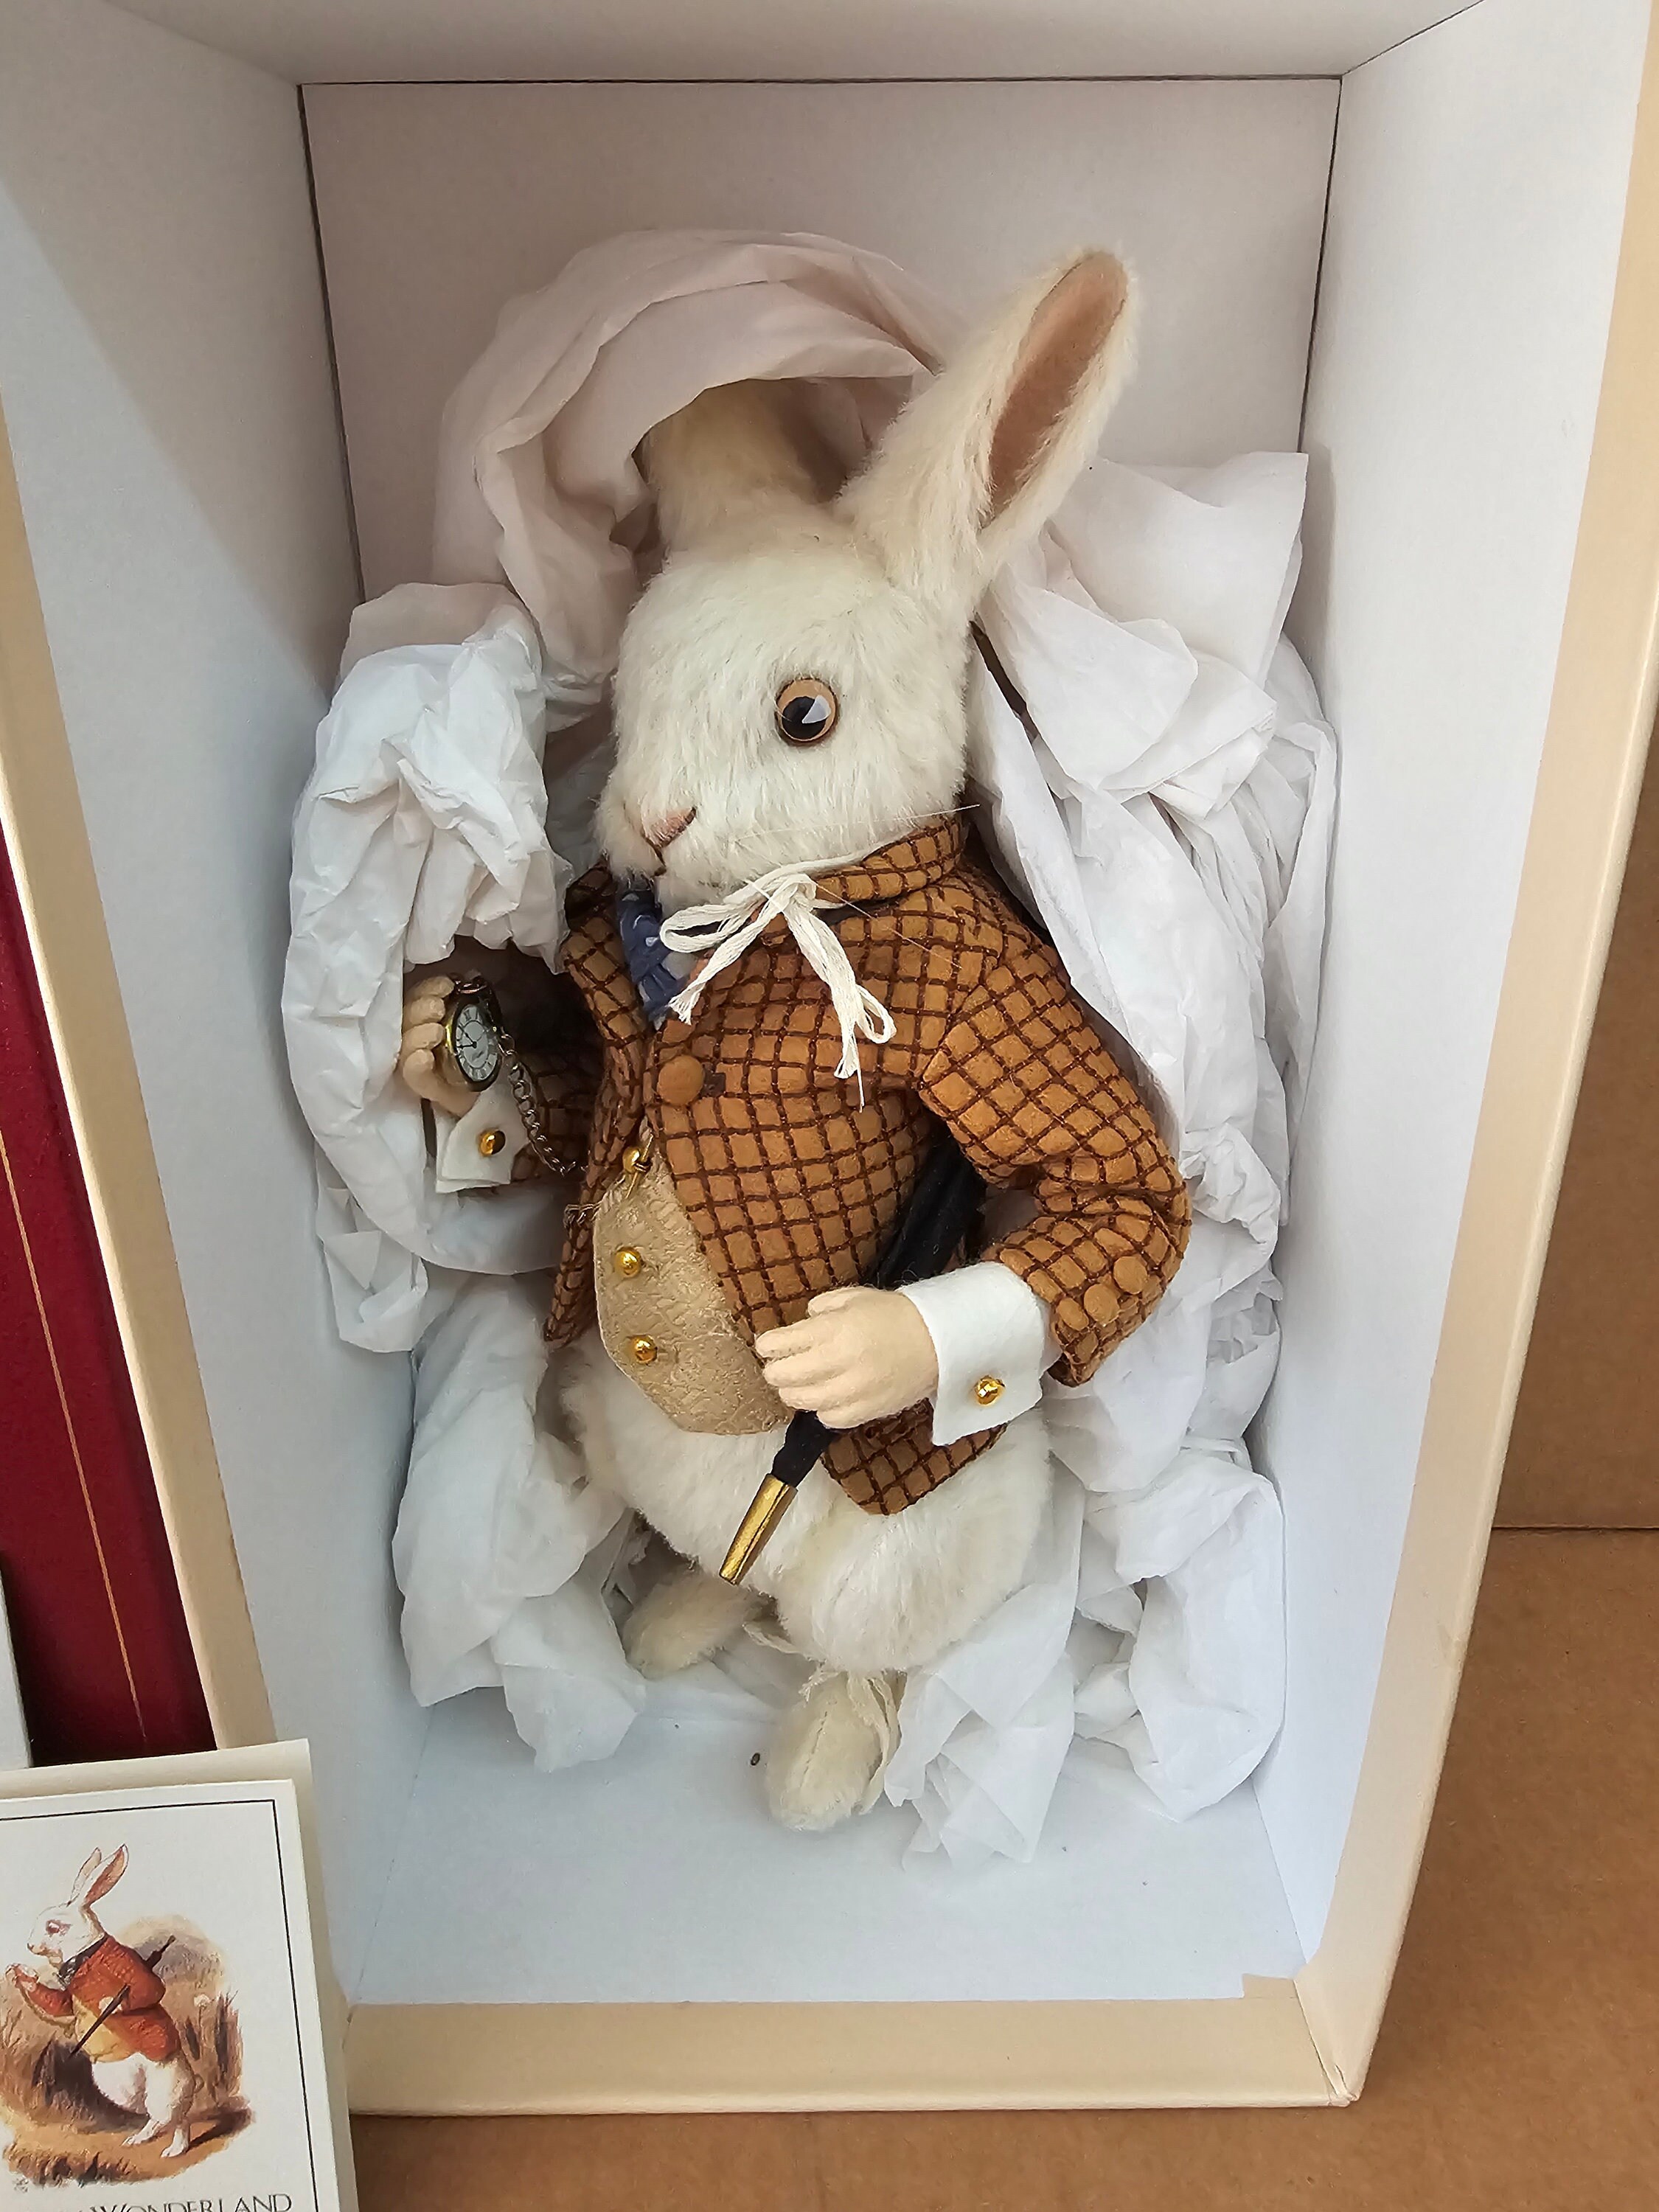 Wren the White Rabbit, 10 Inch Stuffed Animal Plush